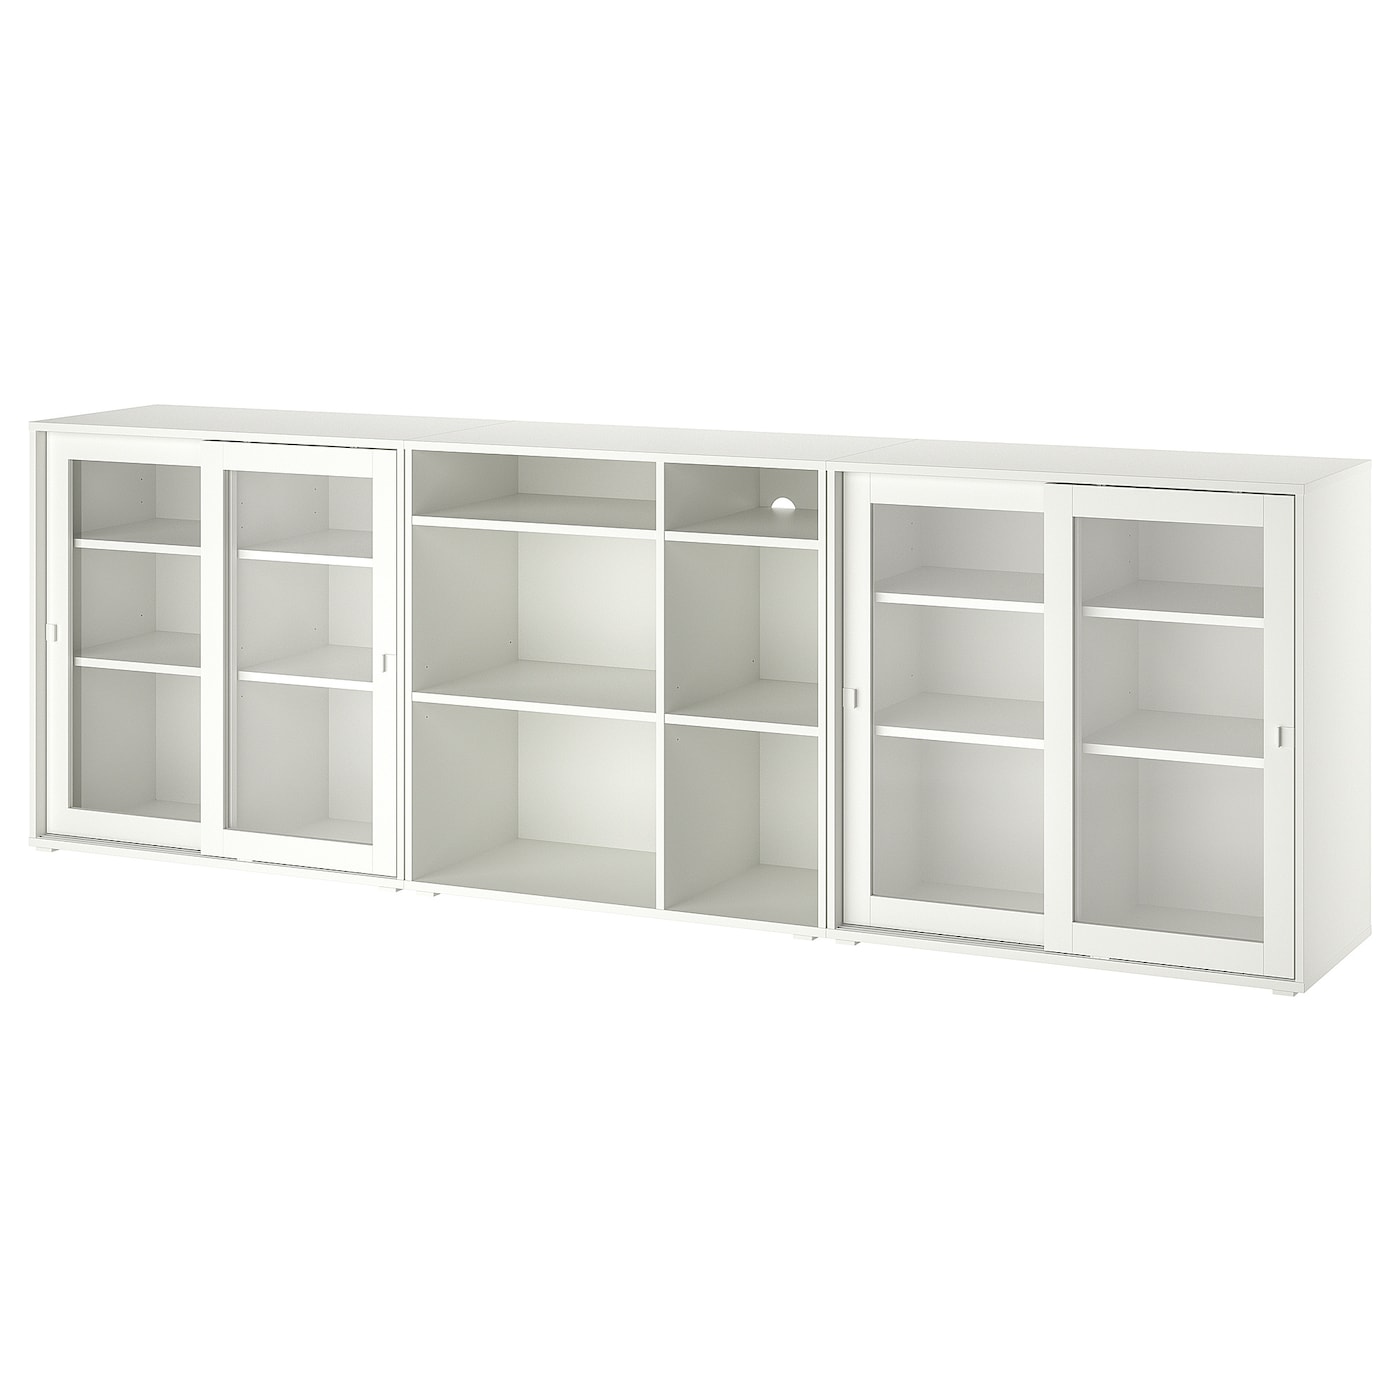 Книжный шкаф - VIHALS IKEA/ ВИХАЛС ИКЕА,   285х90 см, белый